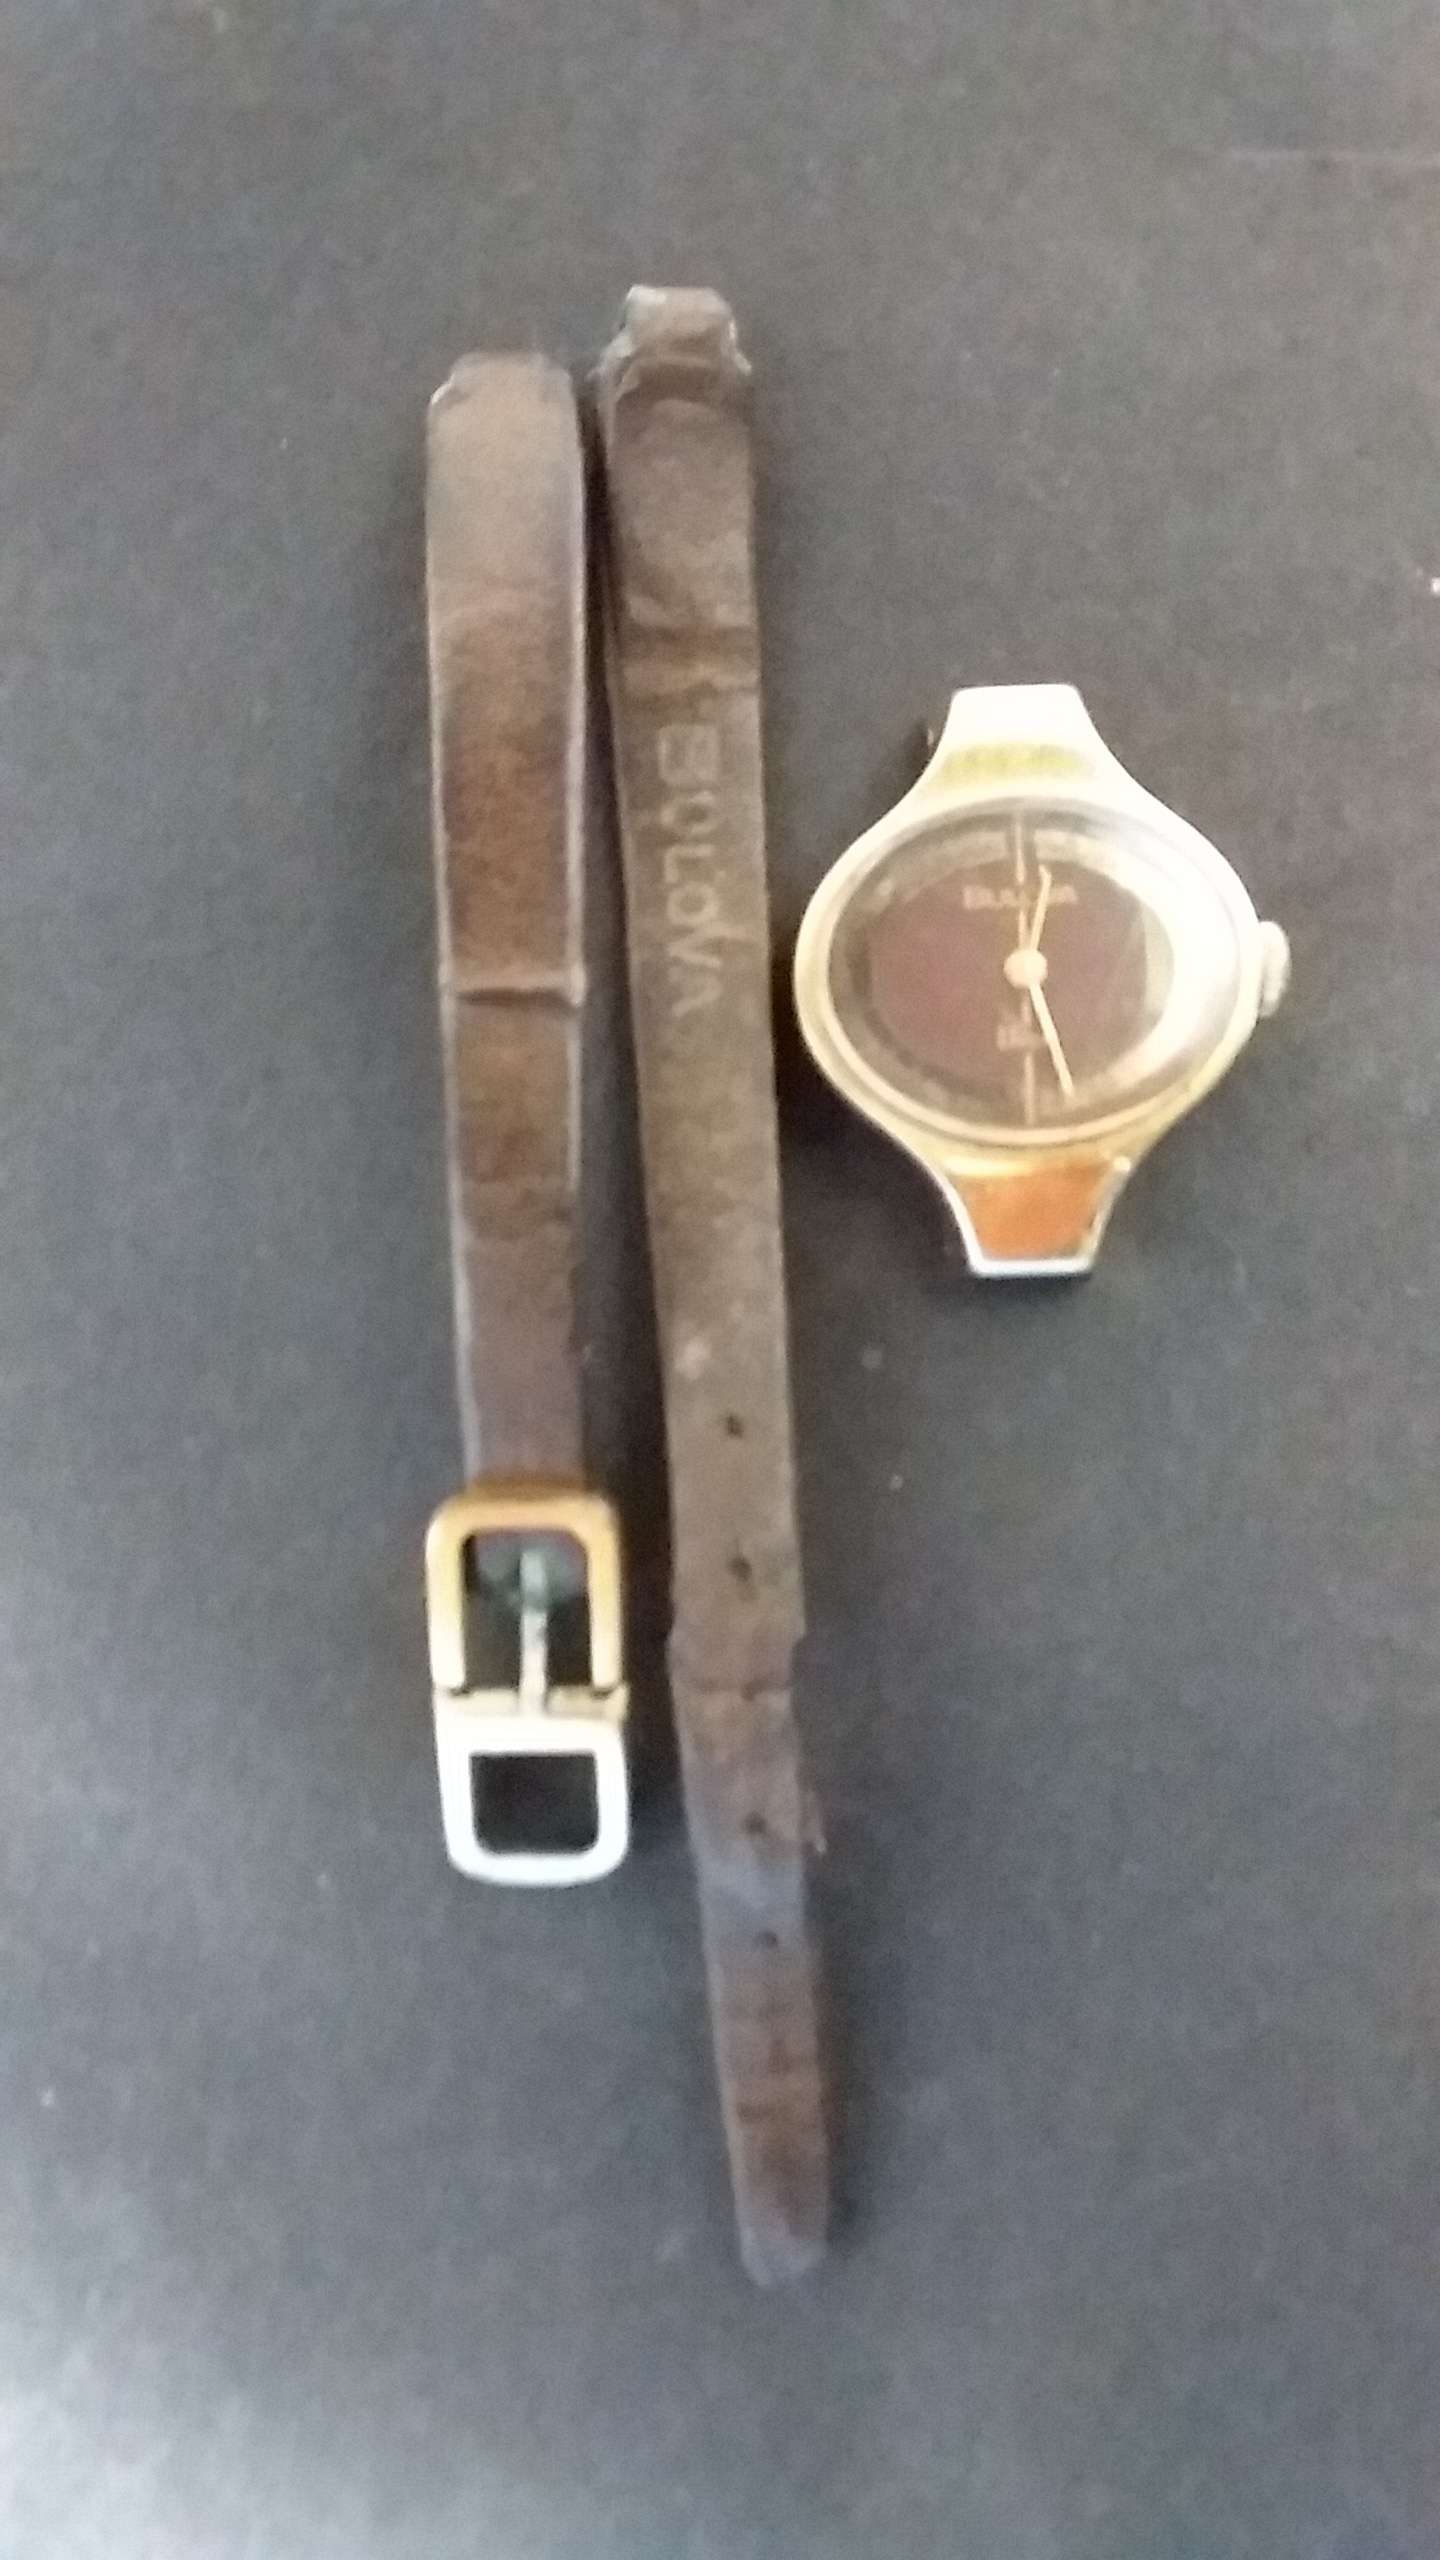 [1973] Bulova watch